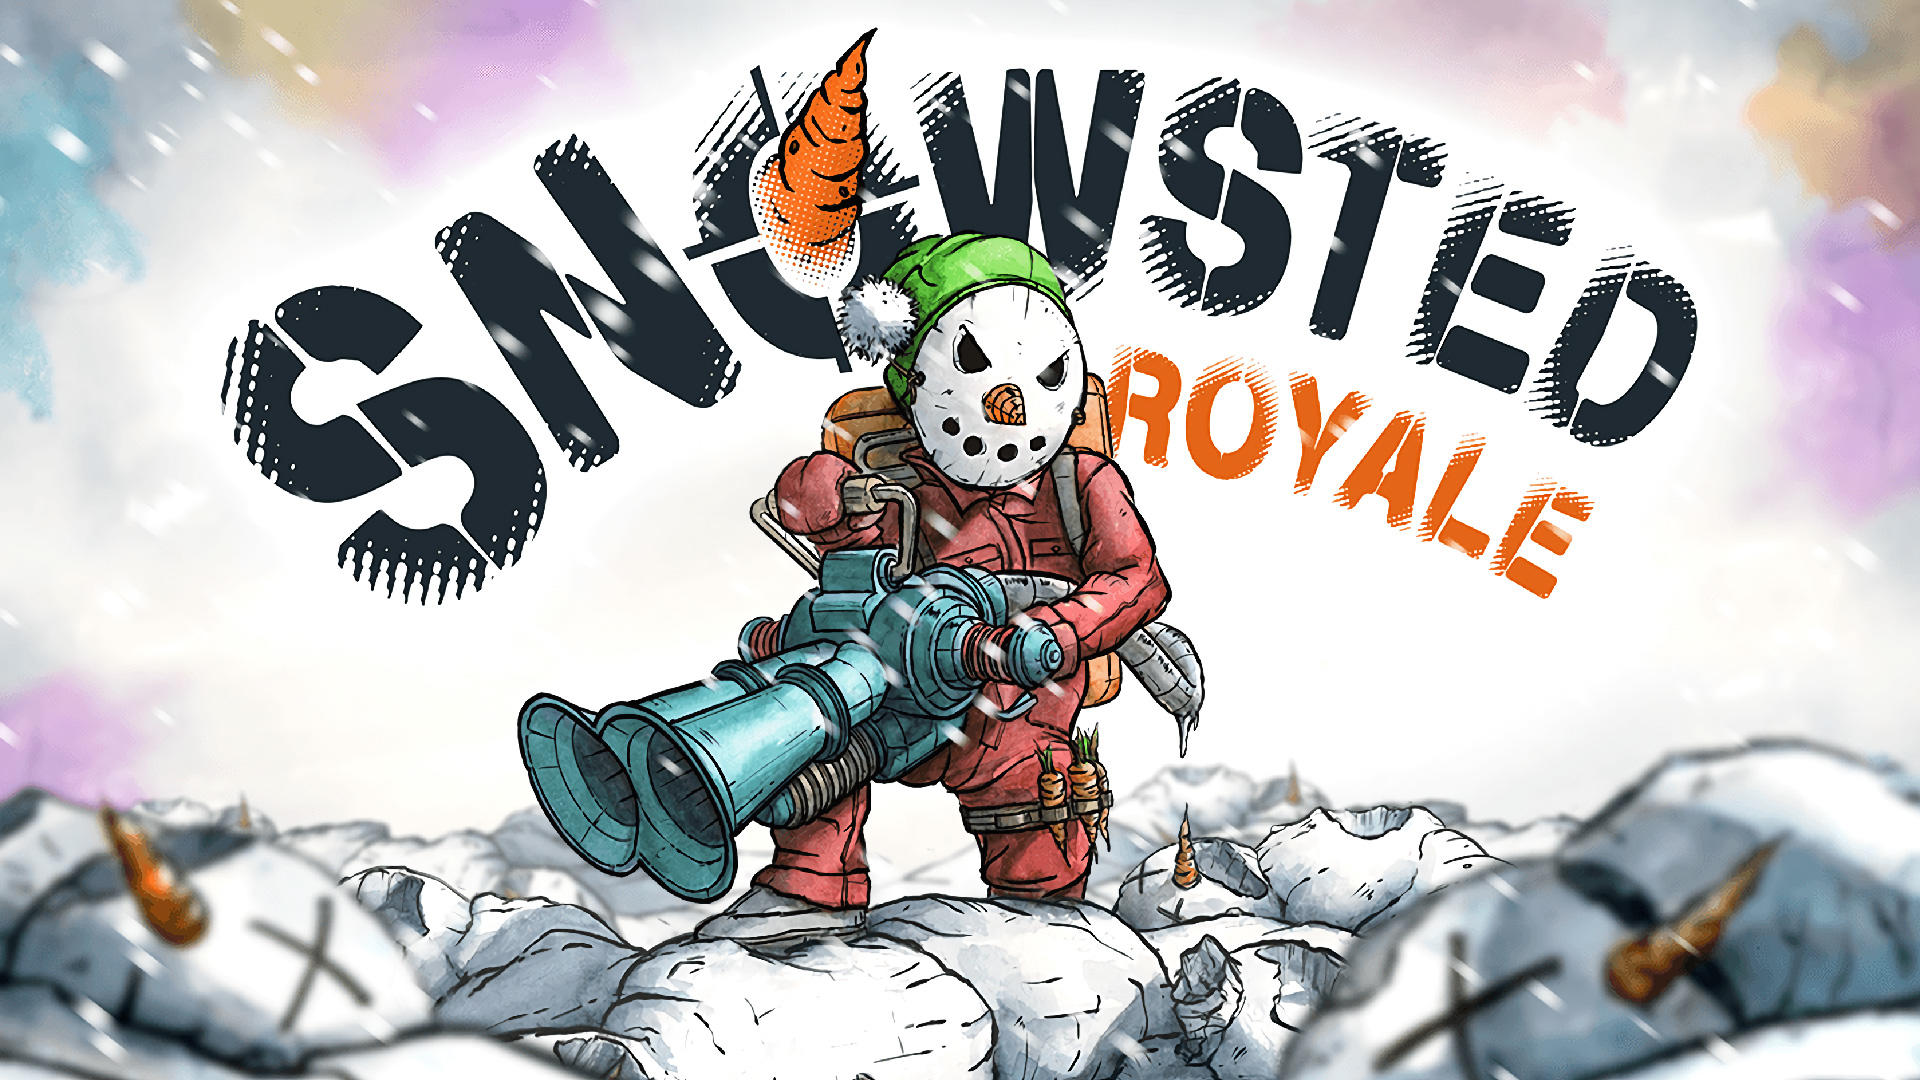 Banner of Snowsted Royale - аркадный многопользовательский 2D-шутер 1.6.15